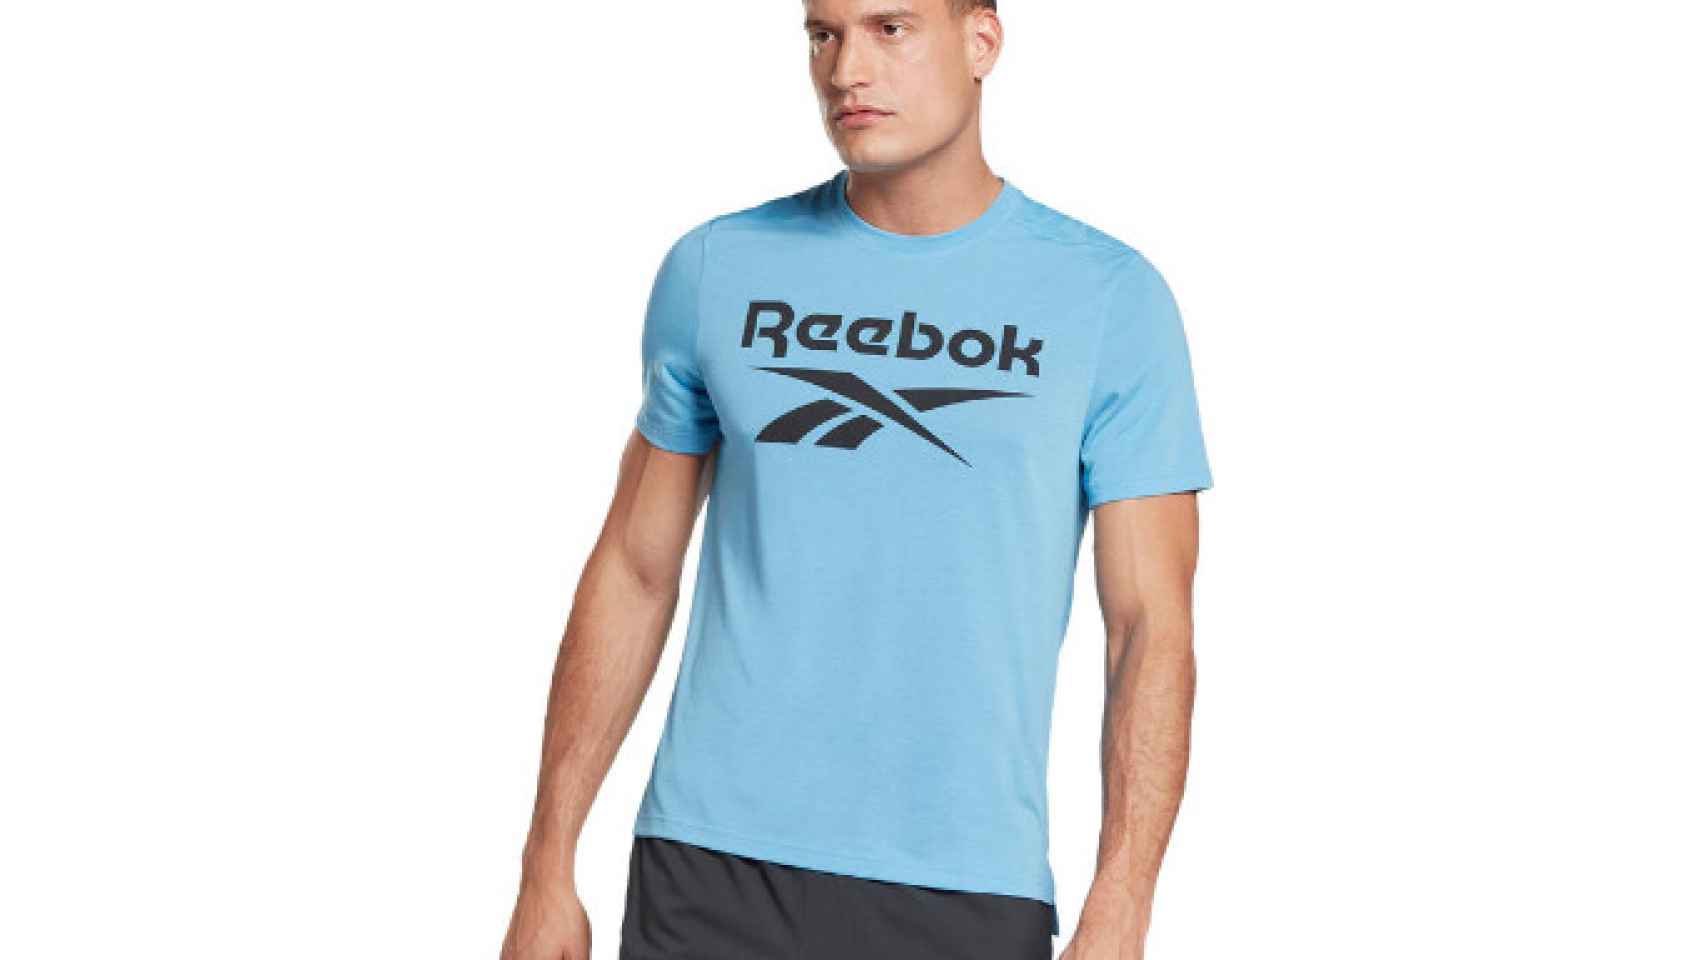 Camiseta Reebok de Decathlon.